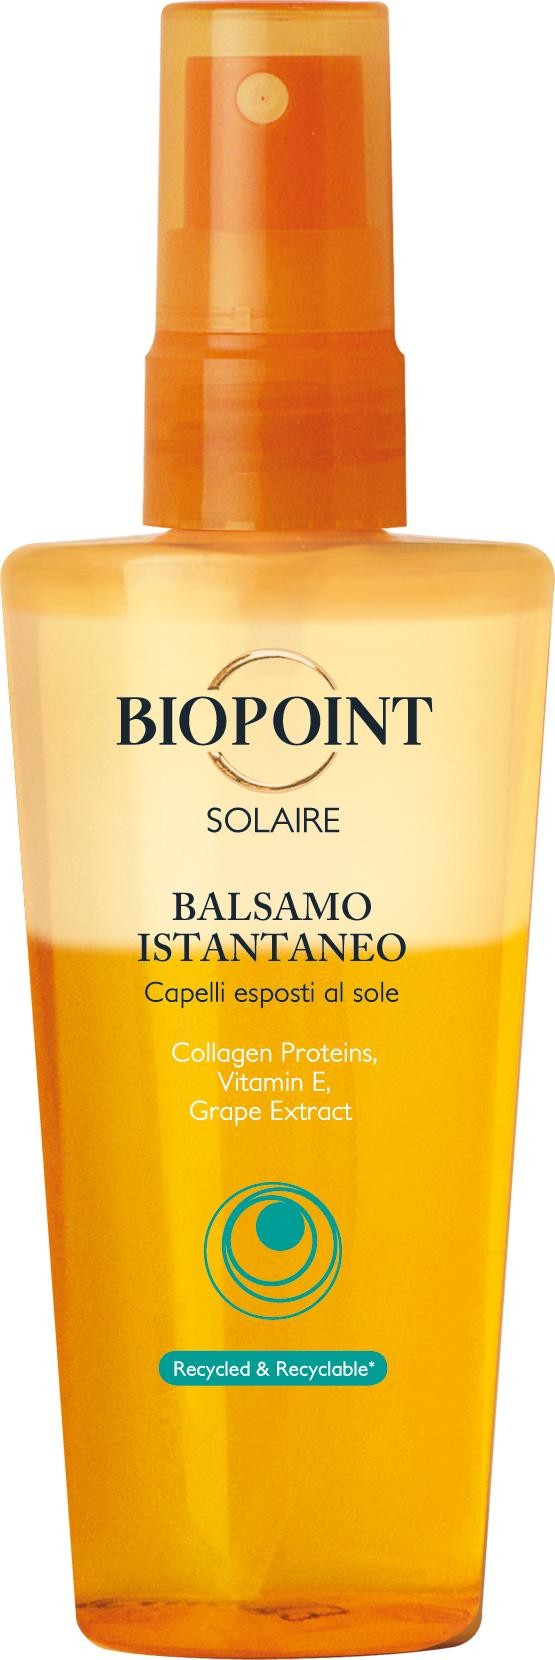 Biopoint Balsamo Istantaneo Bifase 100ml